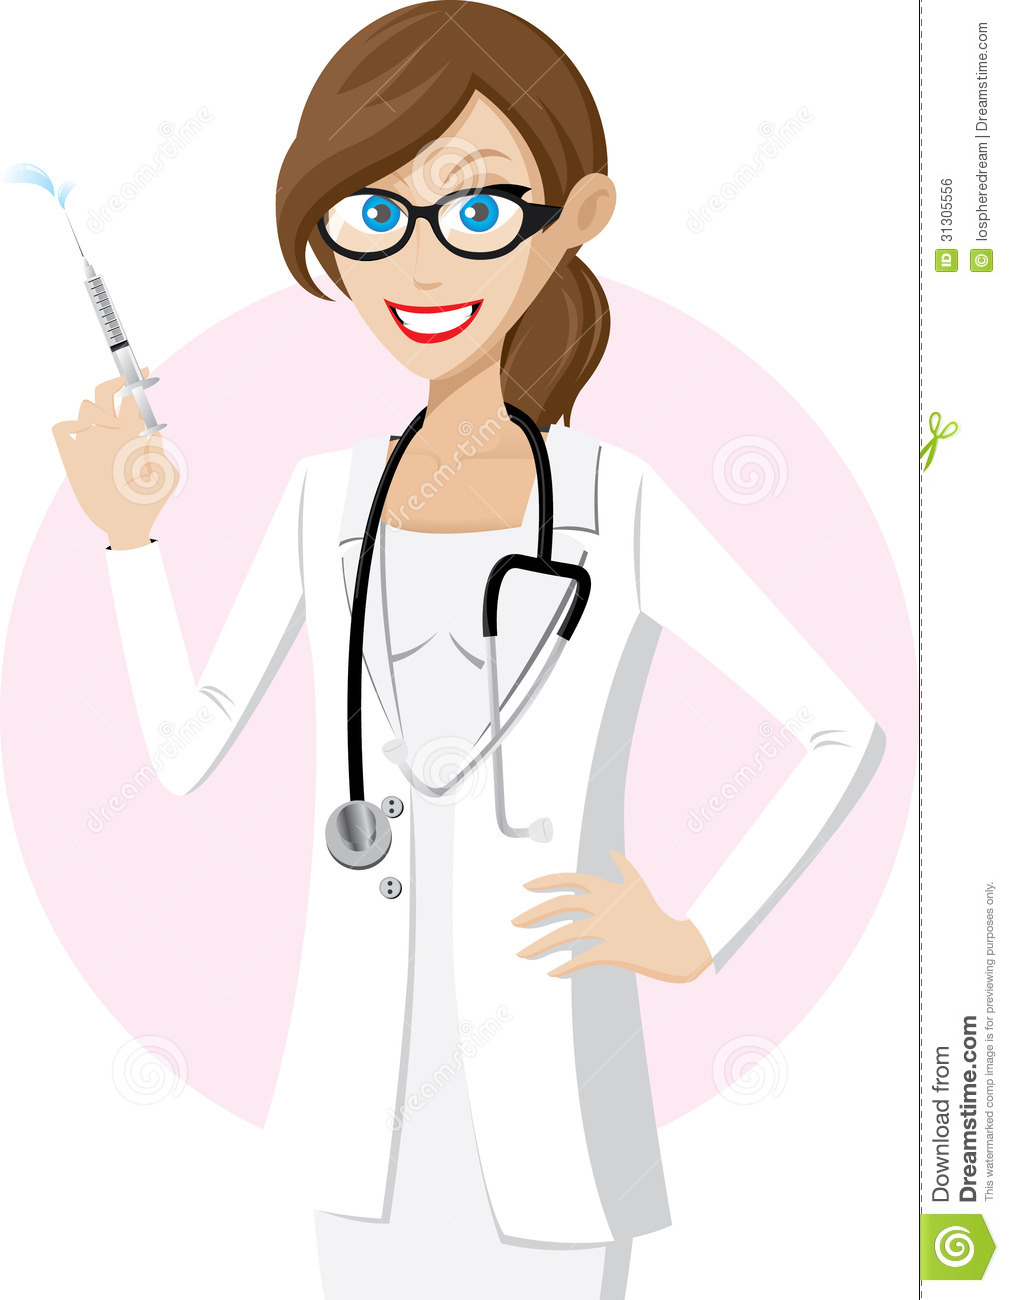 Female Doctor Is Hold A Syringe Royalty Free Stock Image   Image